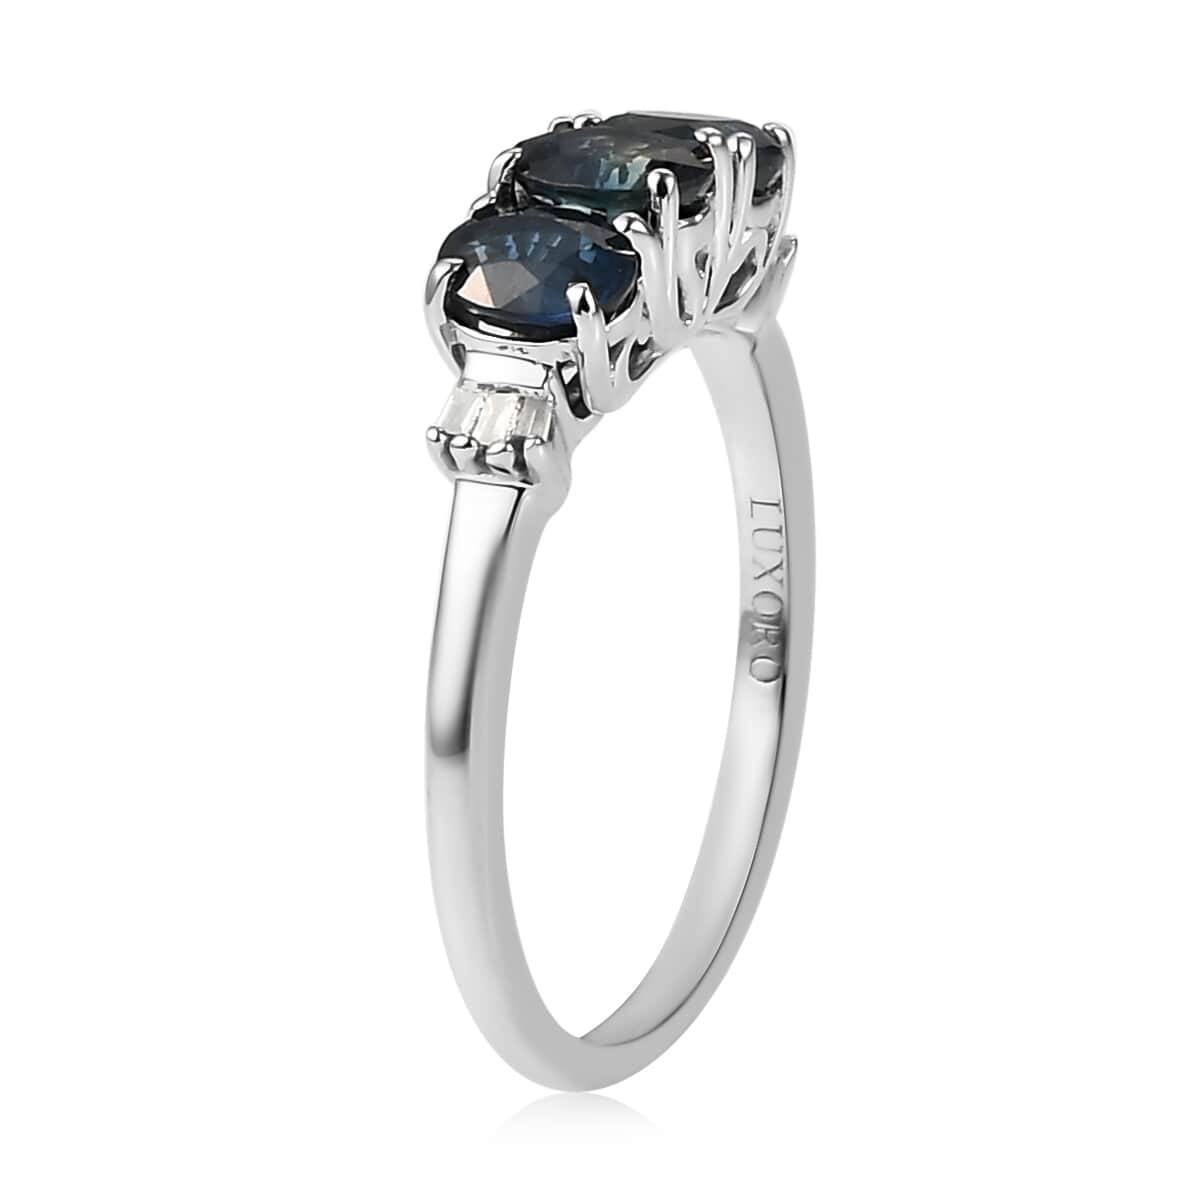 LUXORO 10K White Gold AAA Indigo Sapphire and Diamond 3 Stone Ring (Size 10.0) 1.20 ctw image number 3